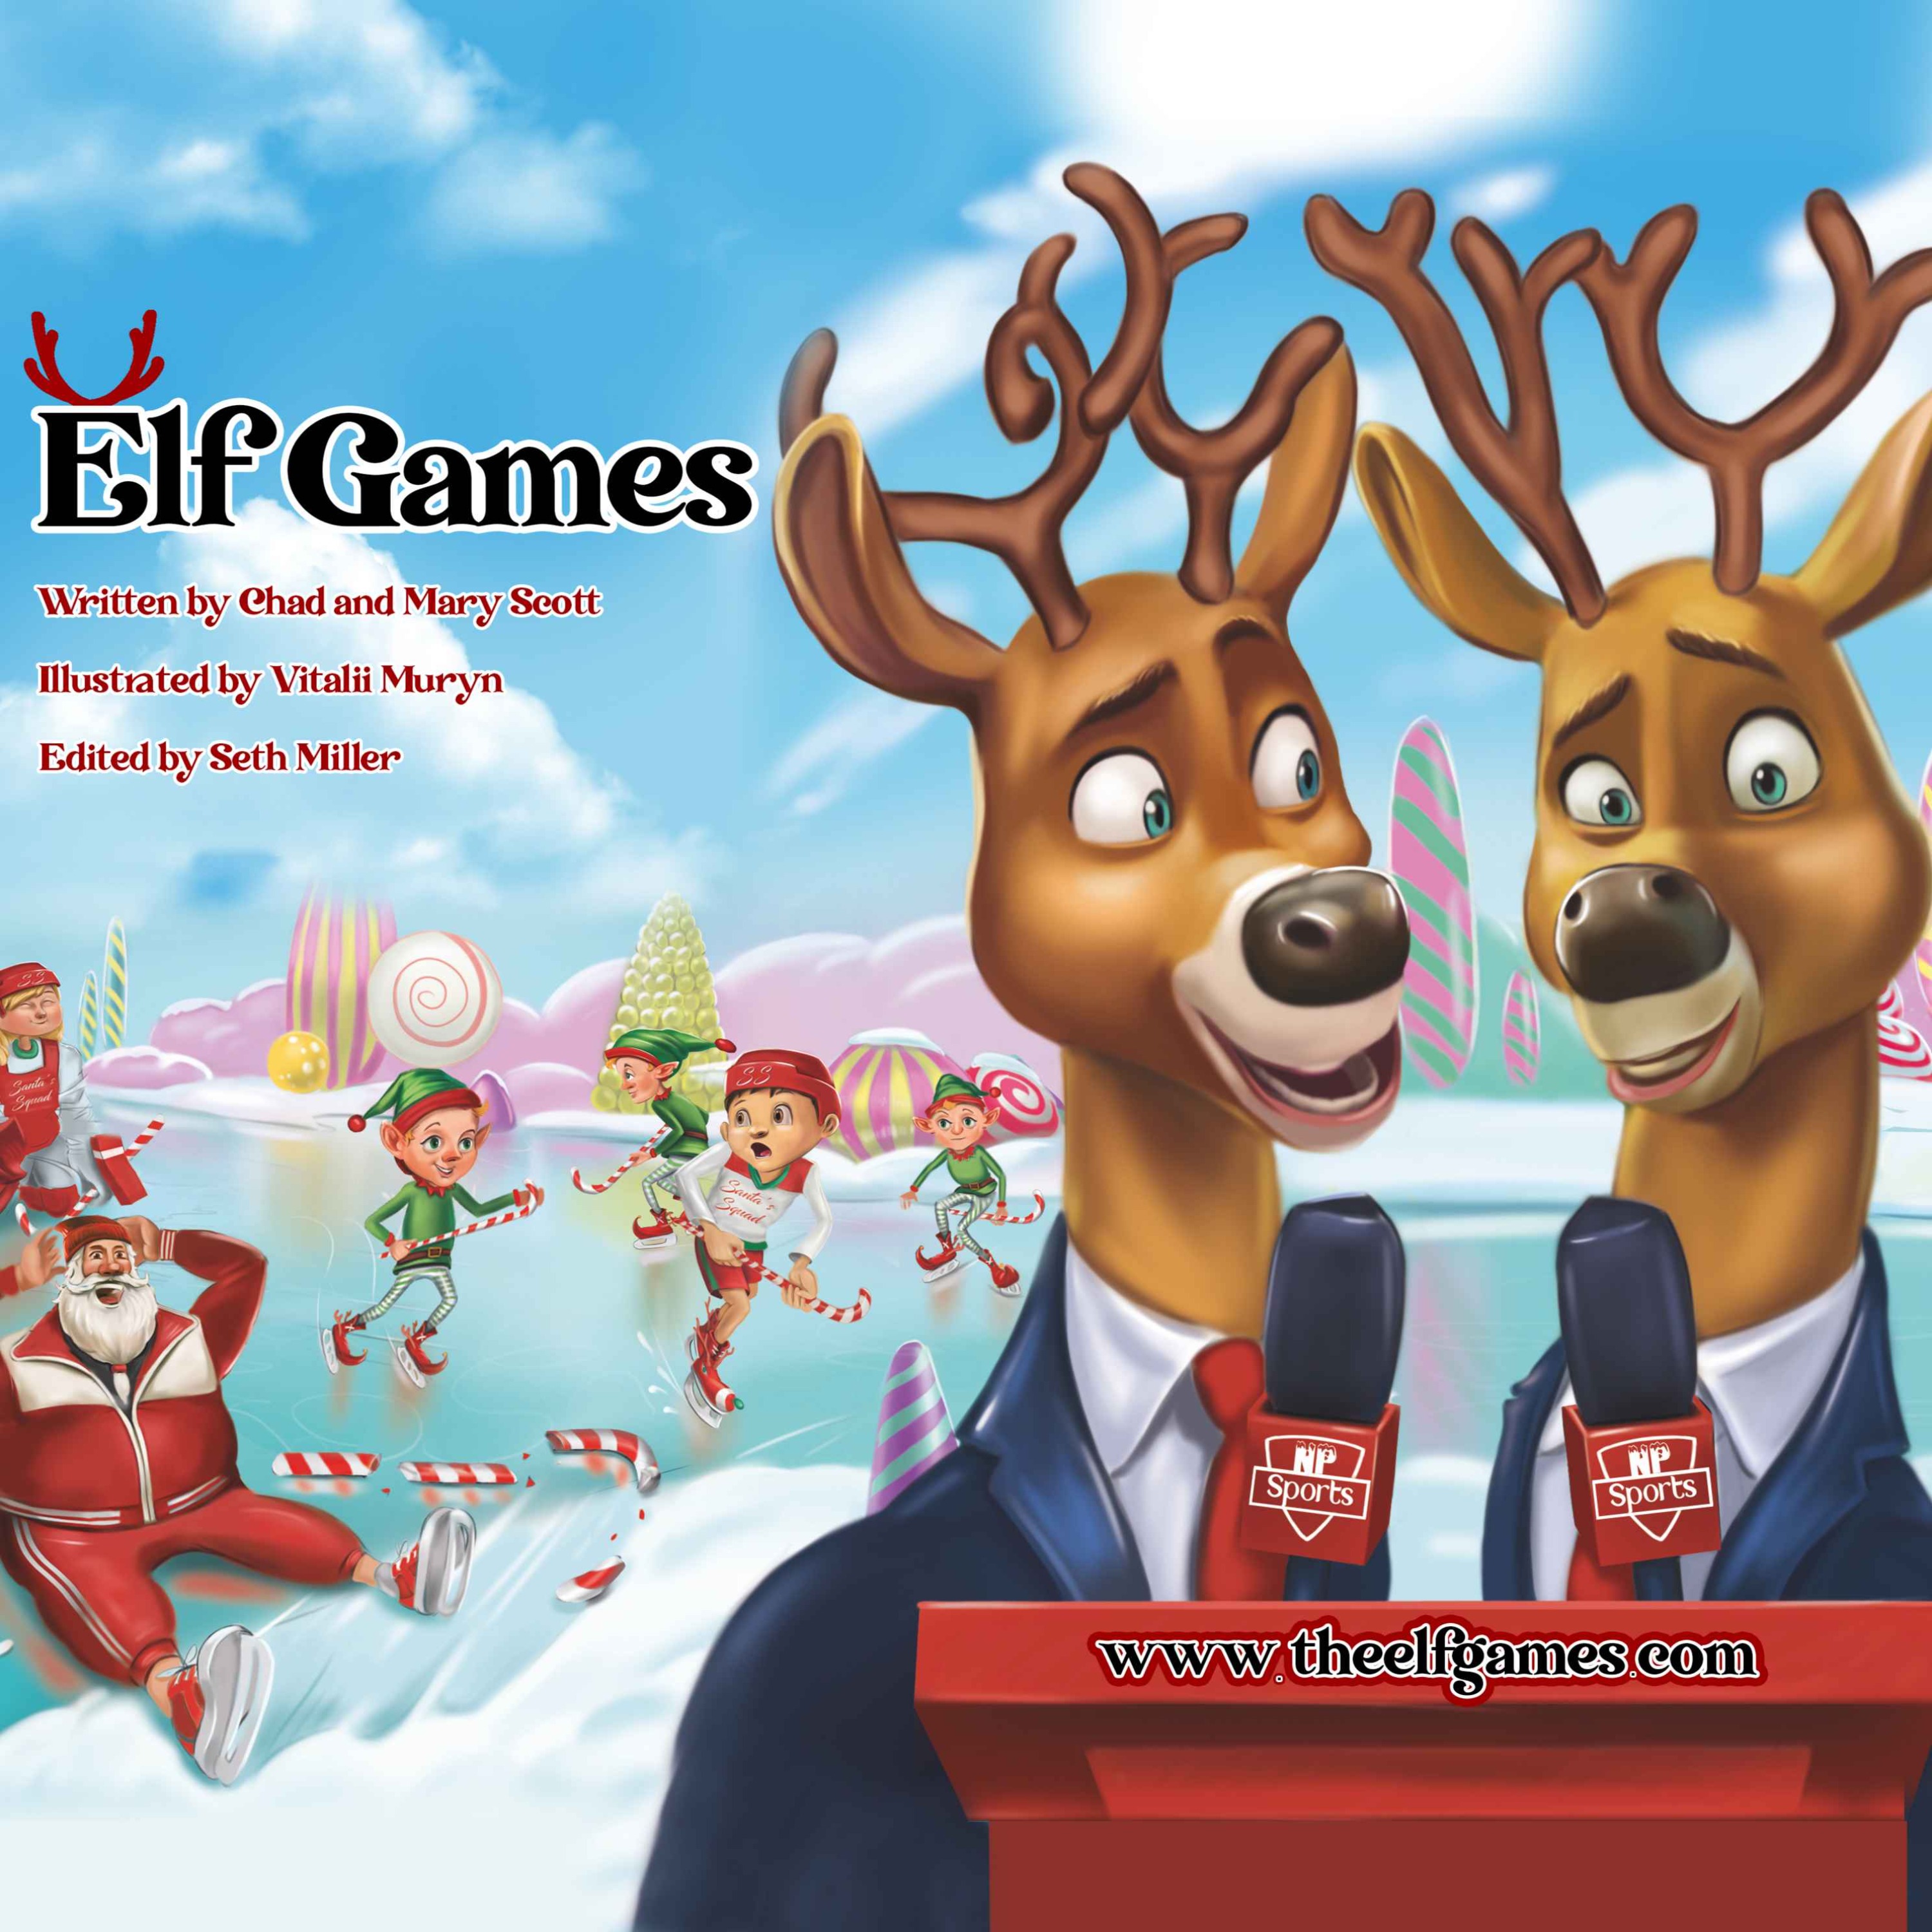 The Elf Games